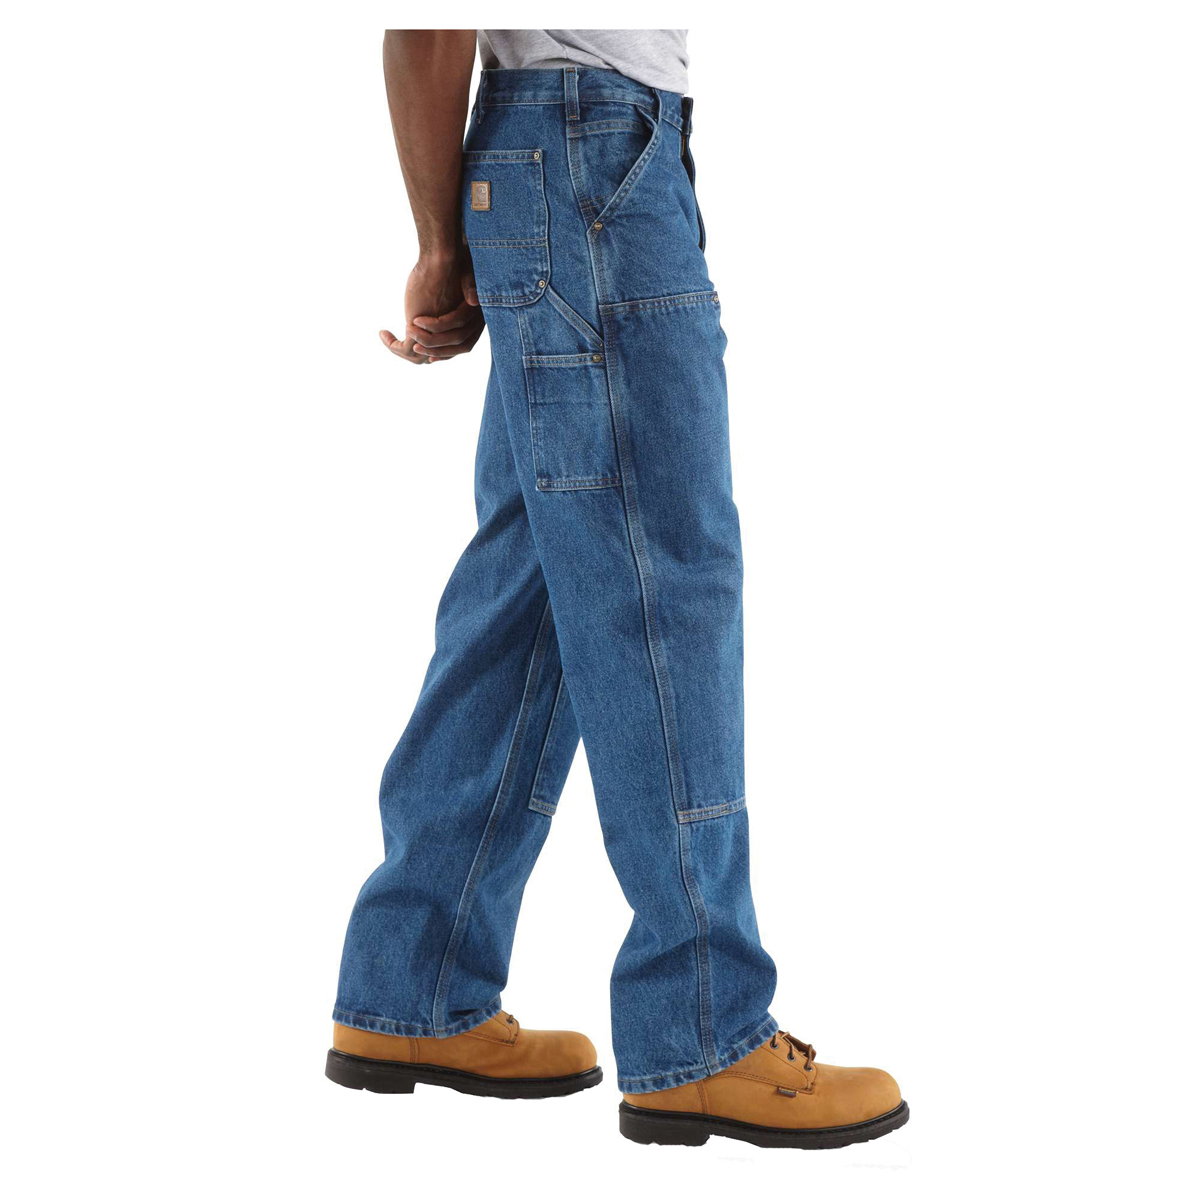 Carhartt B73-DST-32X30 Utility Logger Jeans, 32 in Waist, 30 in L Inseam, Darkstone, Loose Fit - 7